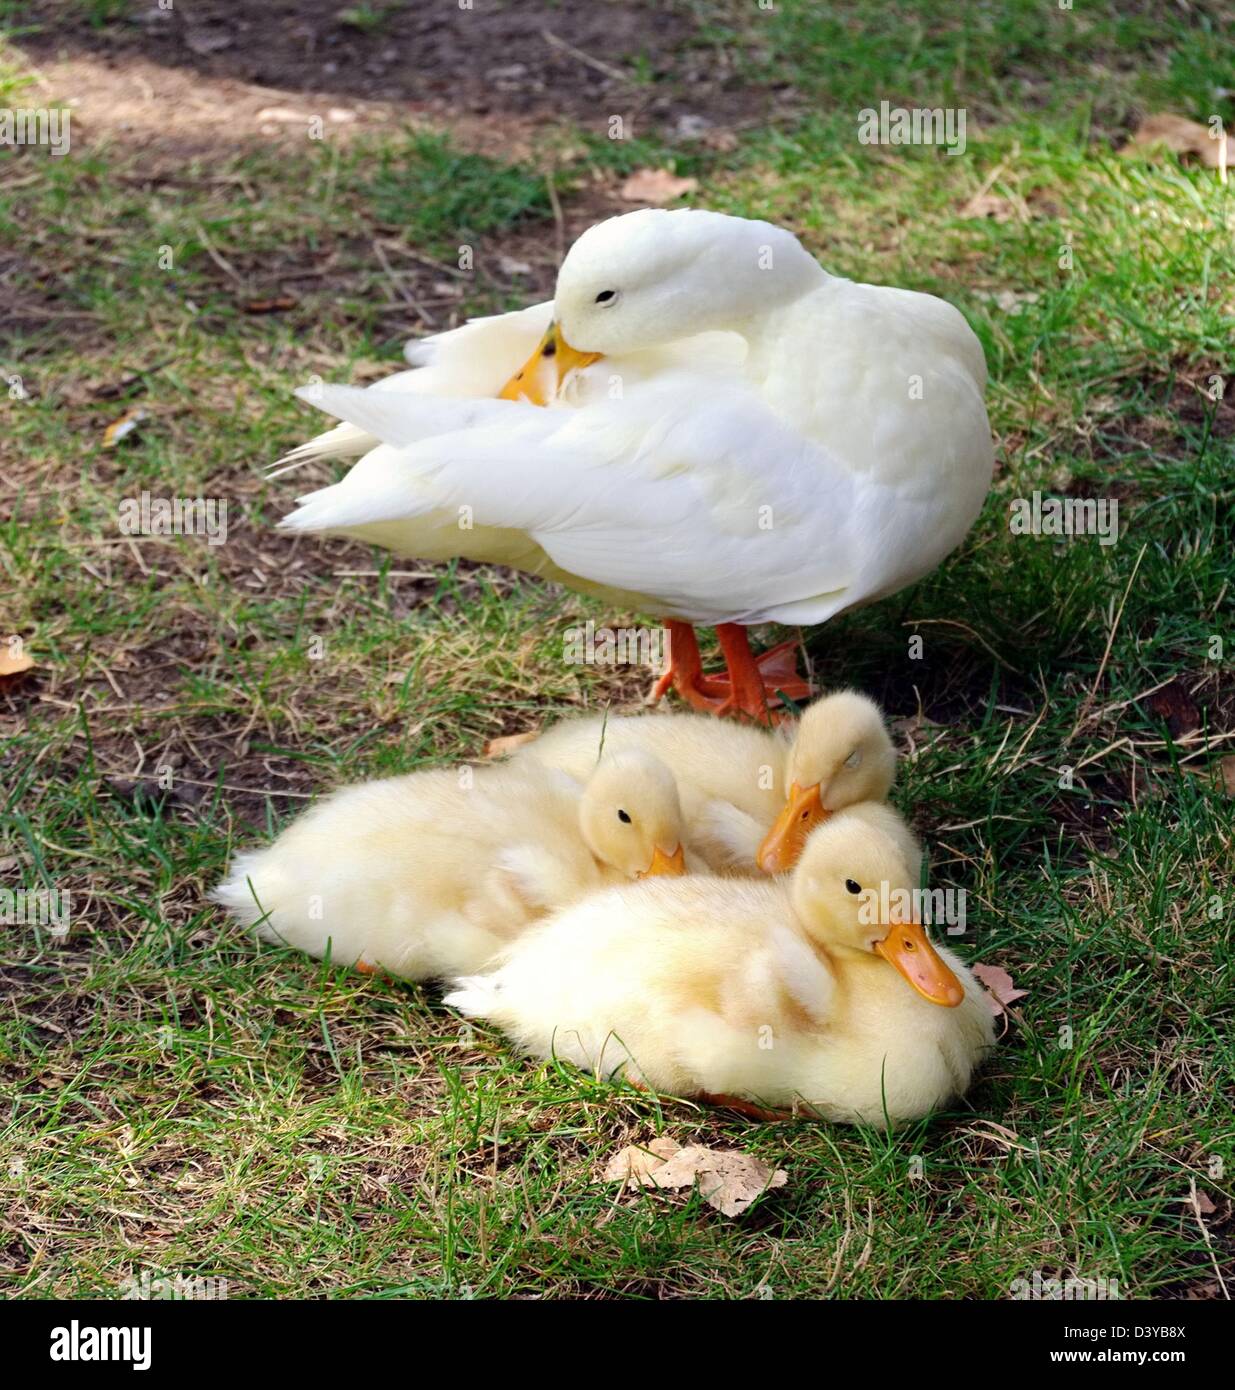 Ente mit Kueken - duck with chicks 01 Stock Photo